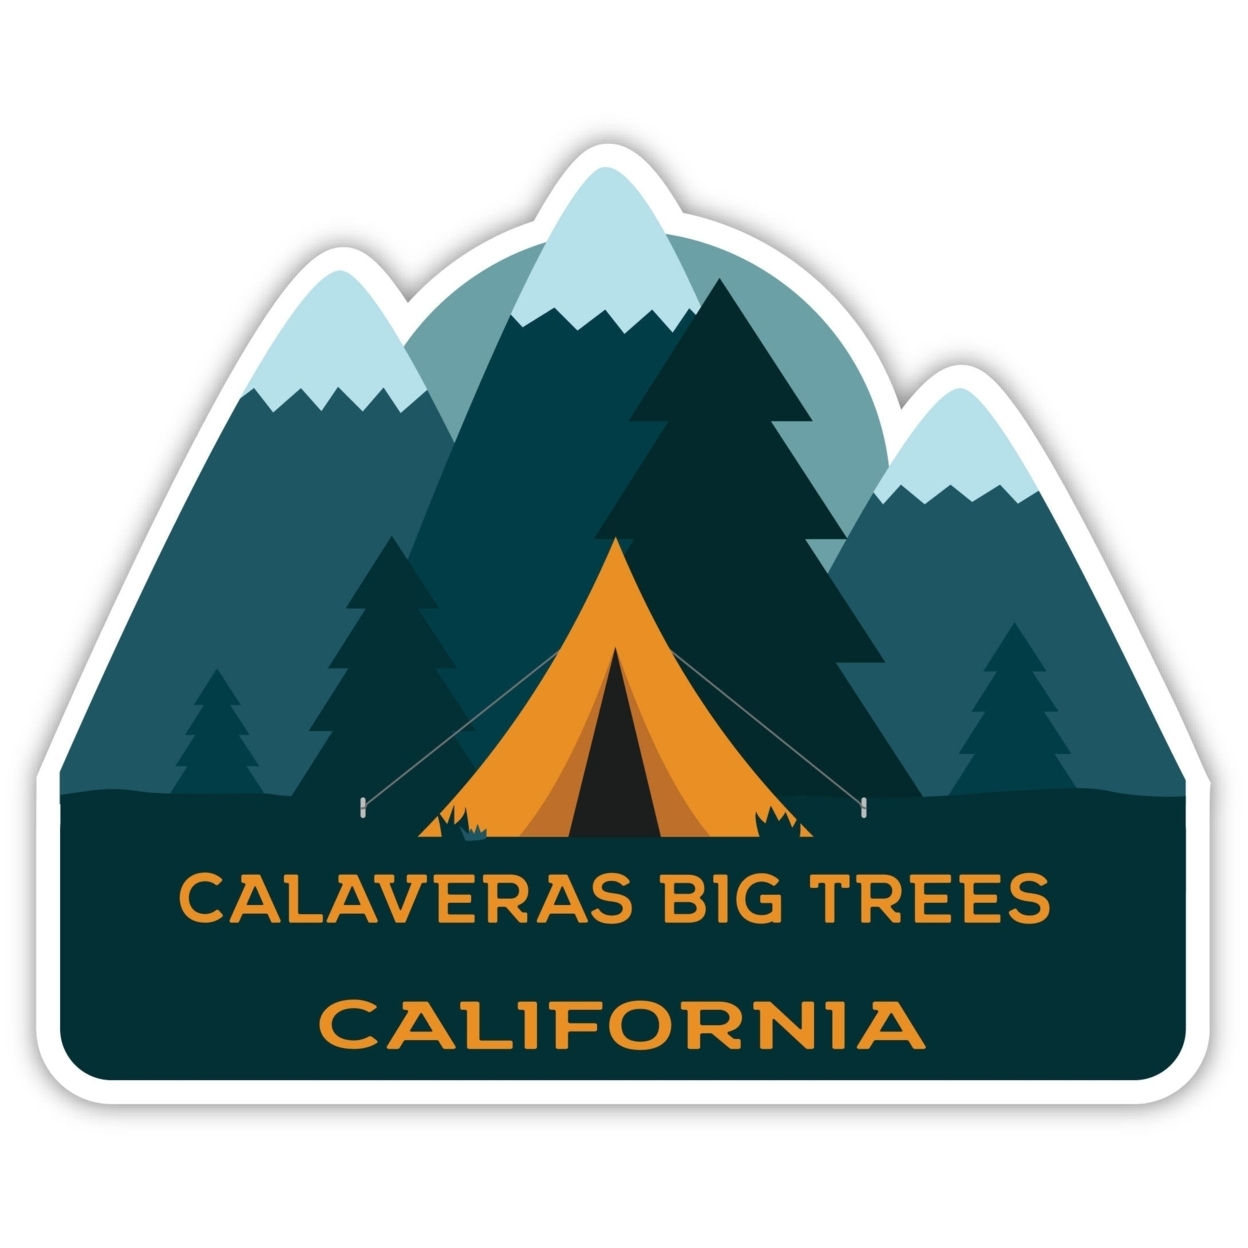 Calaveras Big Trees California Souvenir Decorative Stickers (Choose Theme And Size) - 4-Pack, 6-Inch, Tent